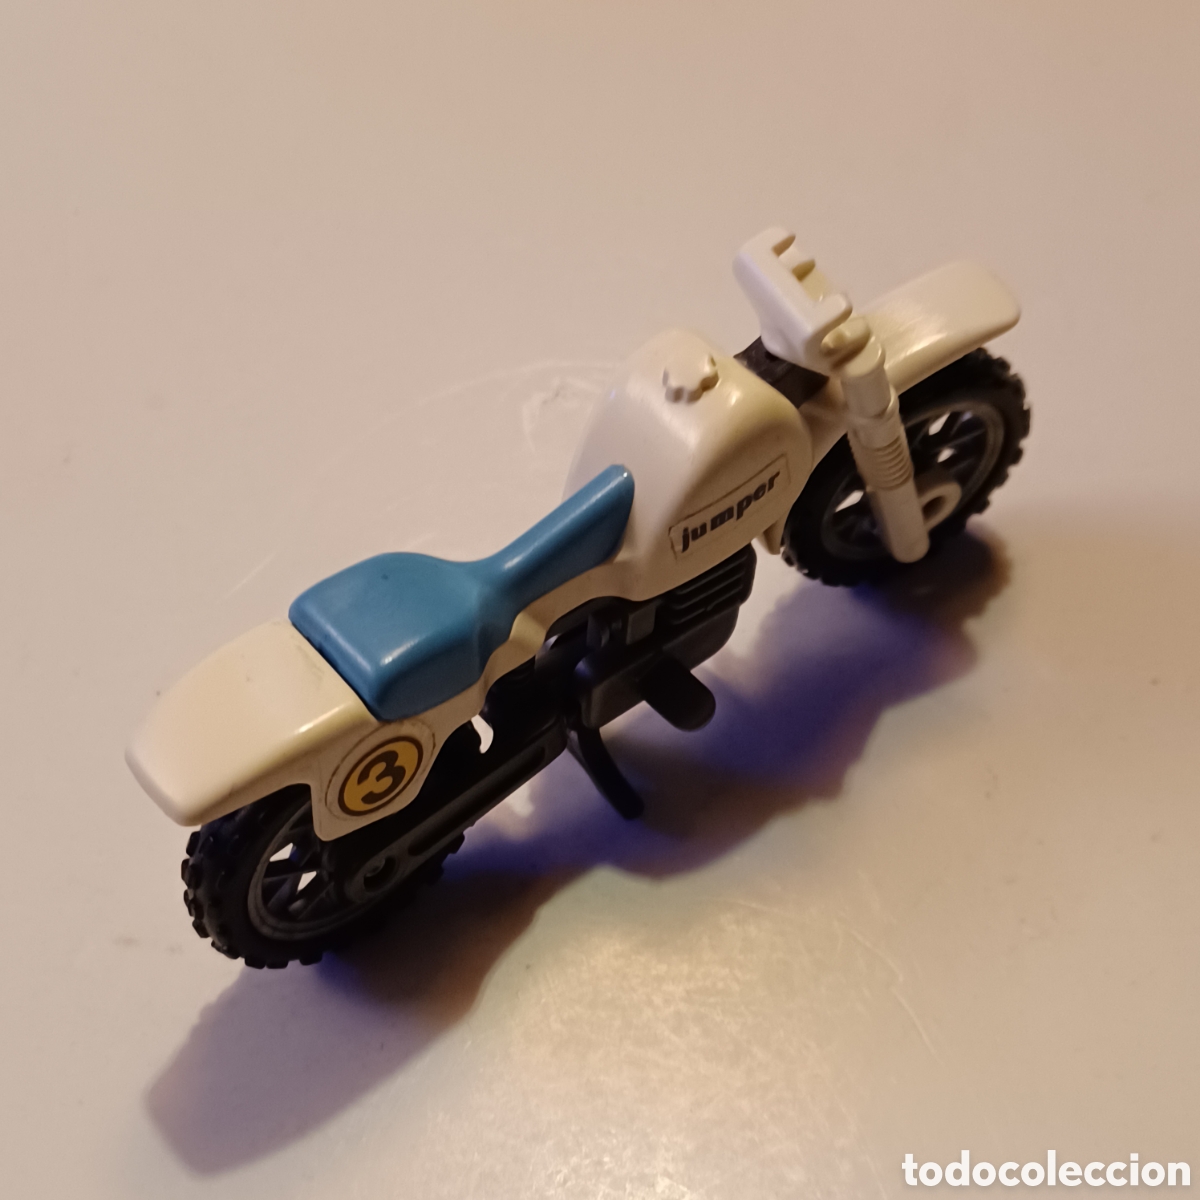 playmobil, moto cross,trial - Acheter Playmobil sur todocoleccion